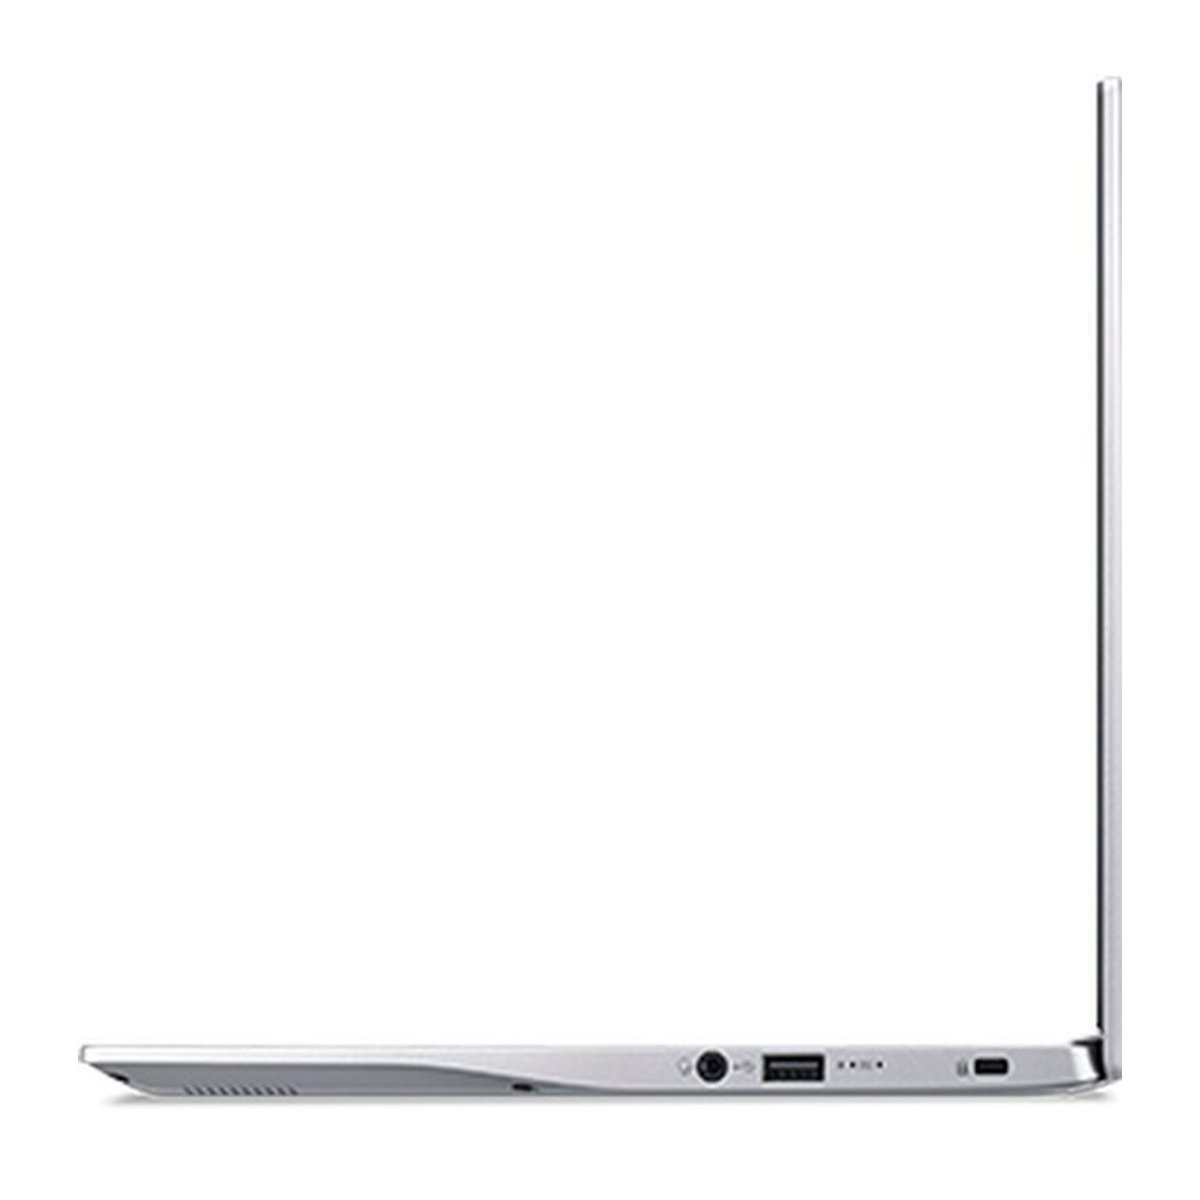 Acer Swift 3 NX.HUKEM.001 Laptop,Core i7-1065G7,16GB RAM,1TB SSD,2GB MX350 Graphics,Windows10,14inch FHD,Iron